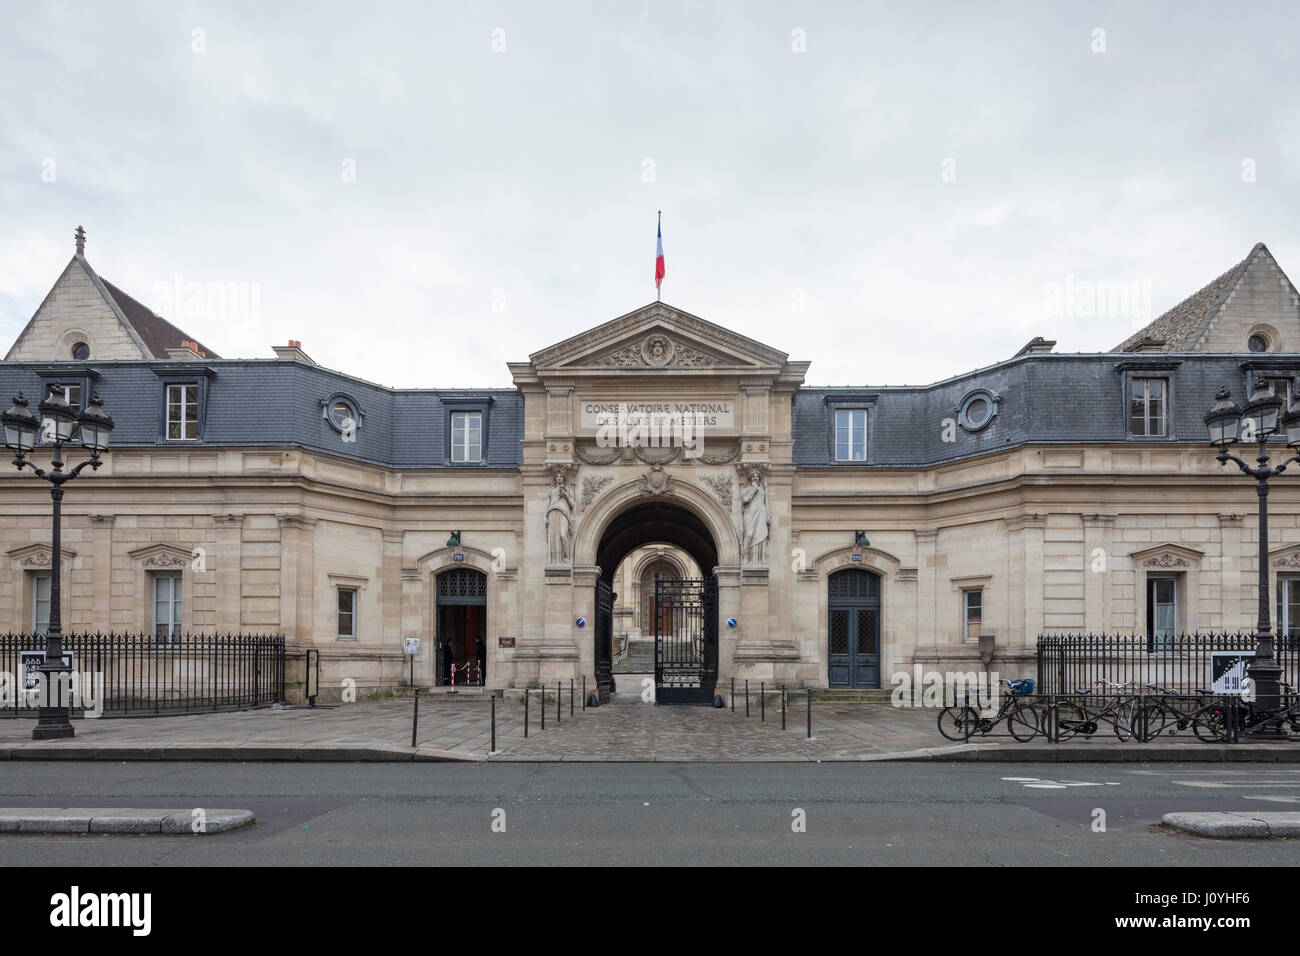 Fassade der The Conservatoire National des Arts et Métiers (CNAM) oder nationalen Conservatoire des Arts et Métiers, Paris, Frankreich Stockfoto